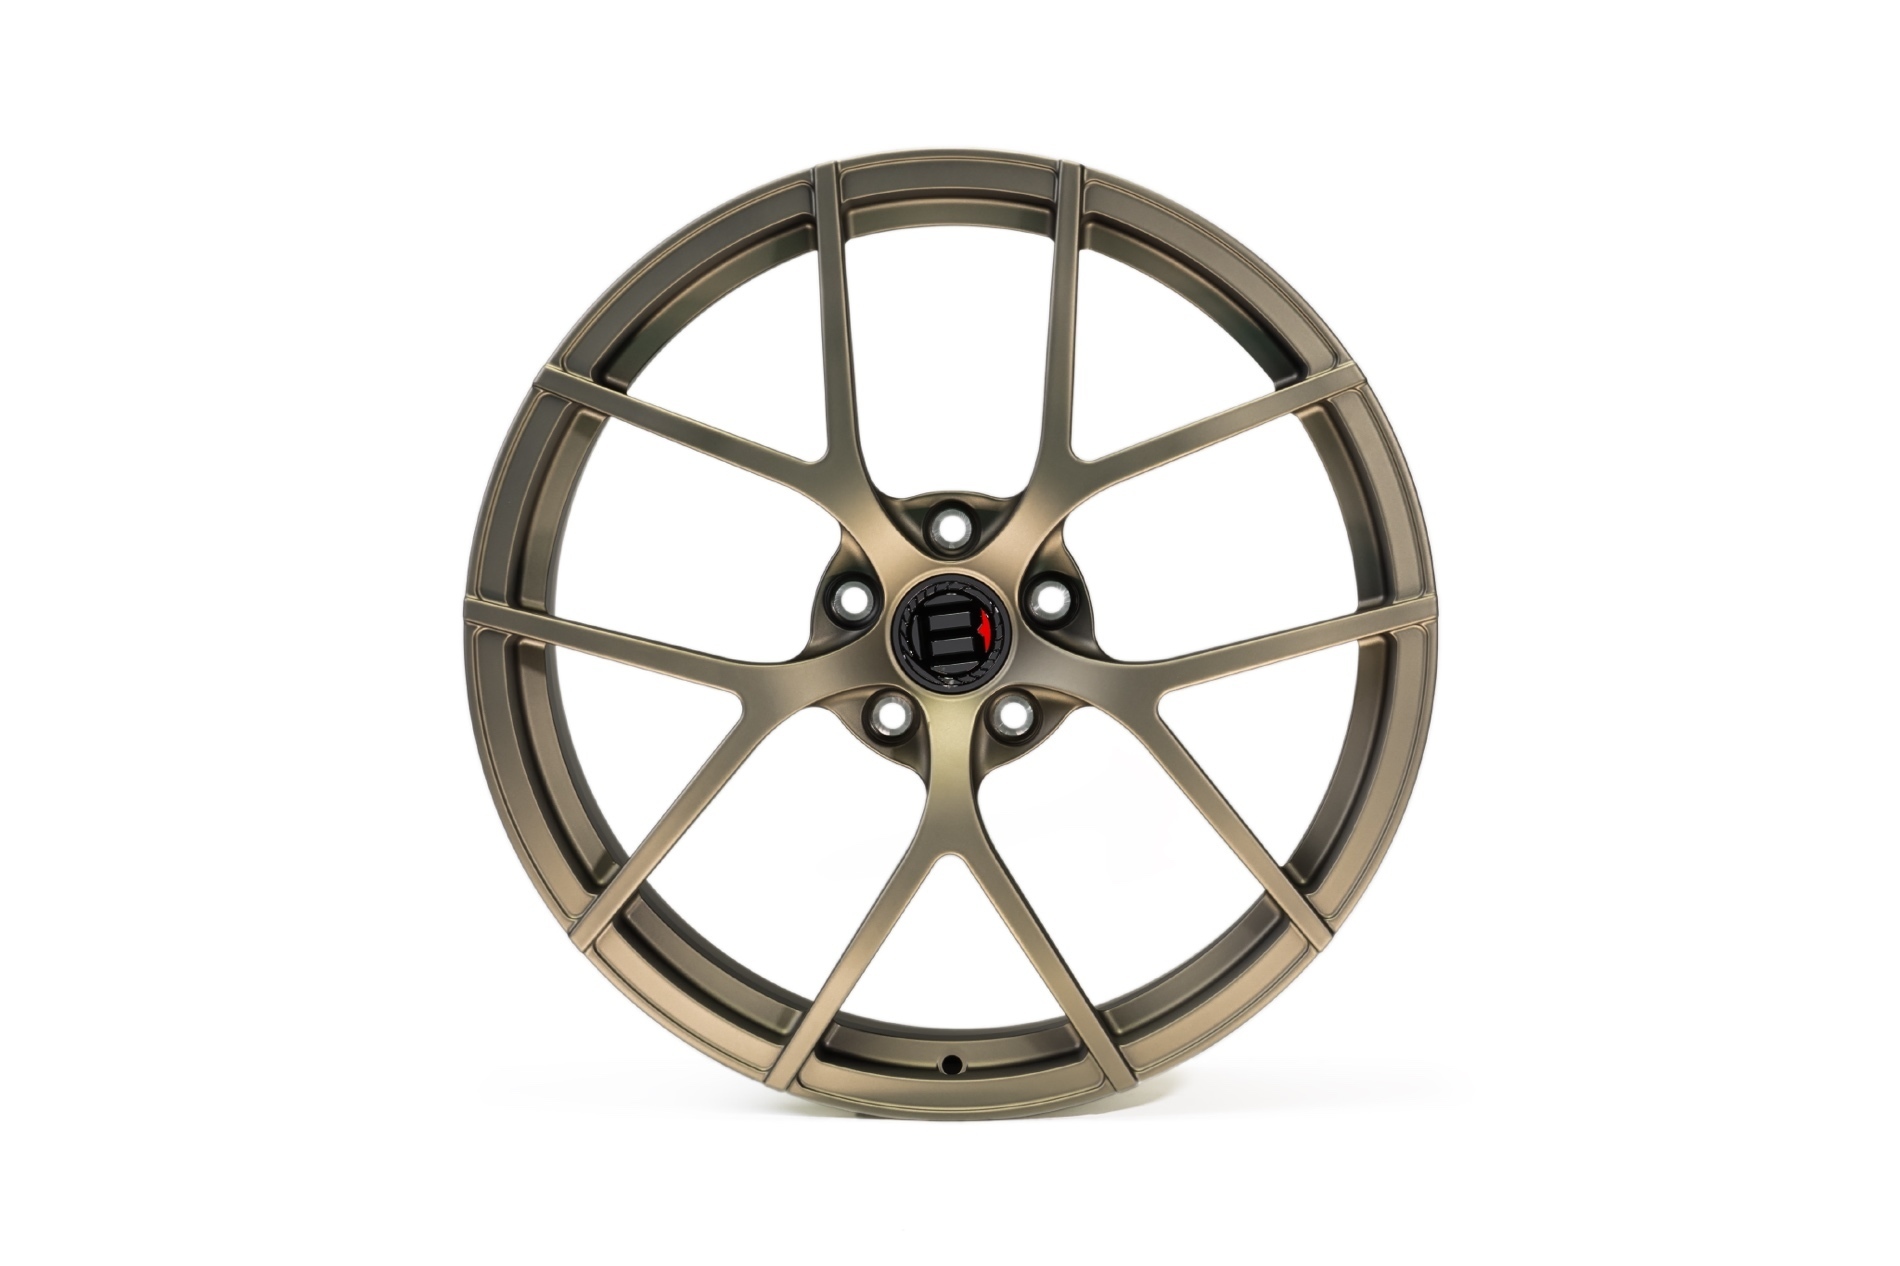 Beneventi K5.1 forged wheels